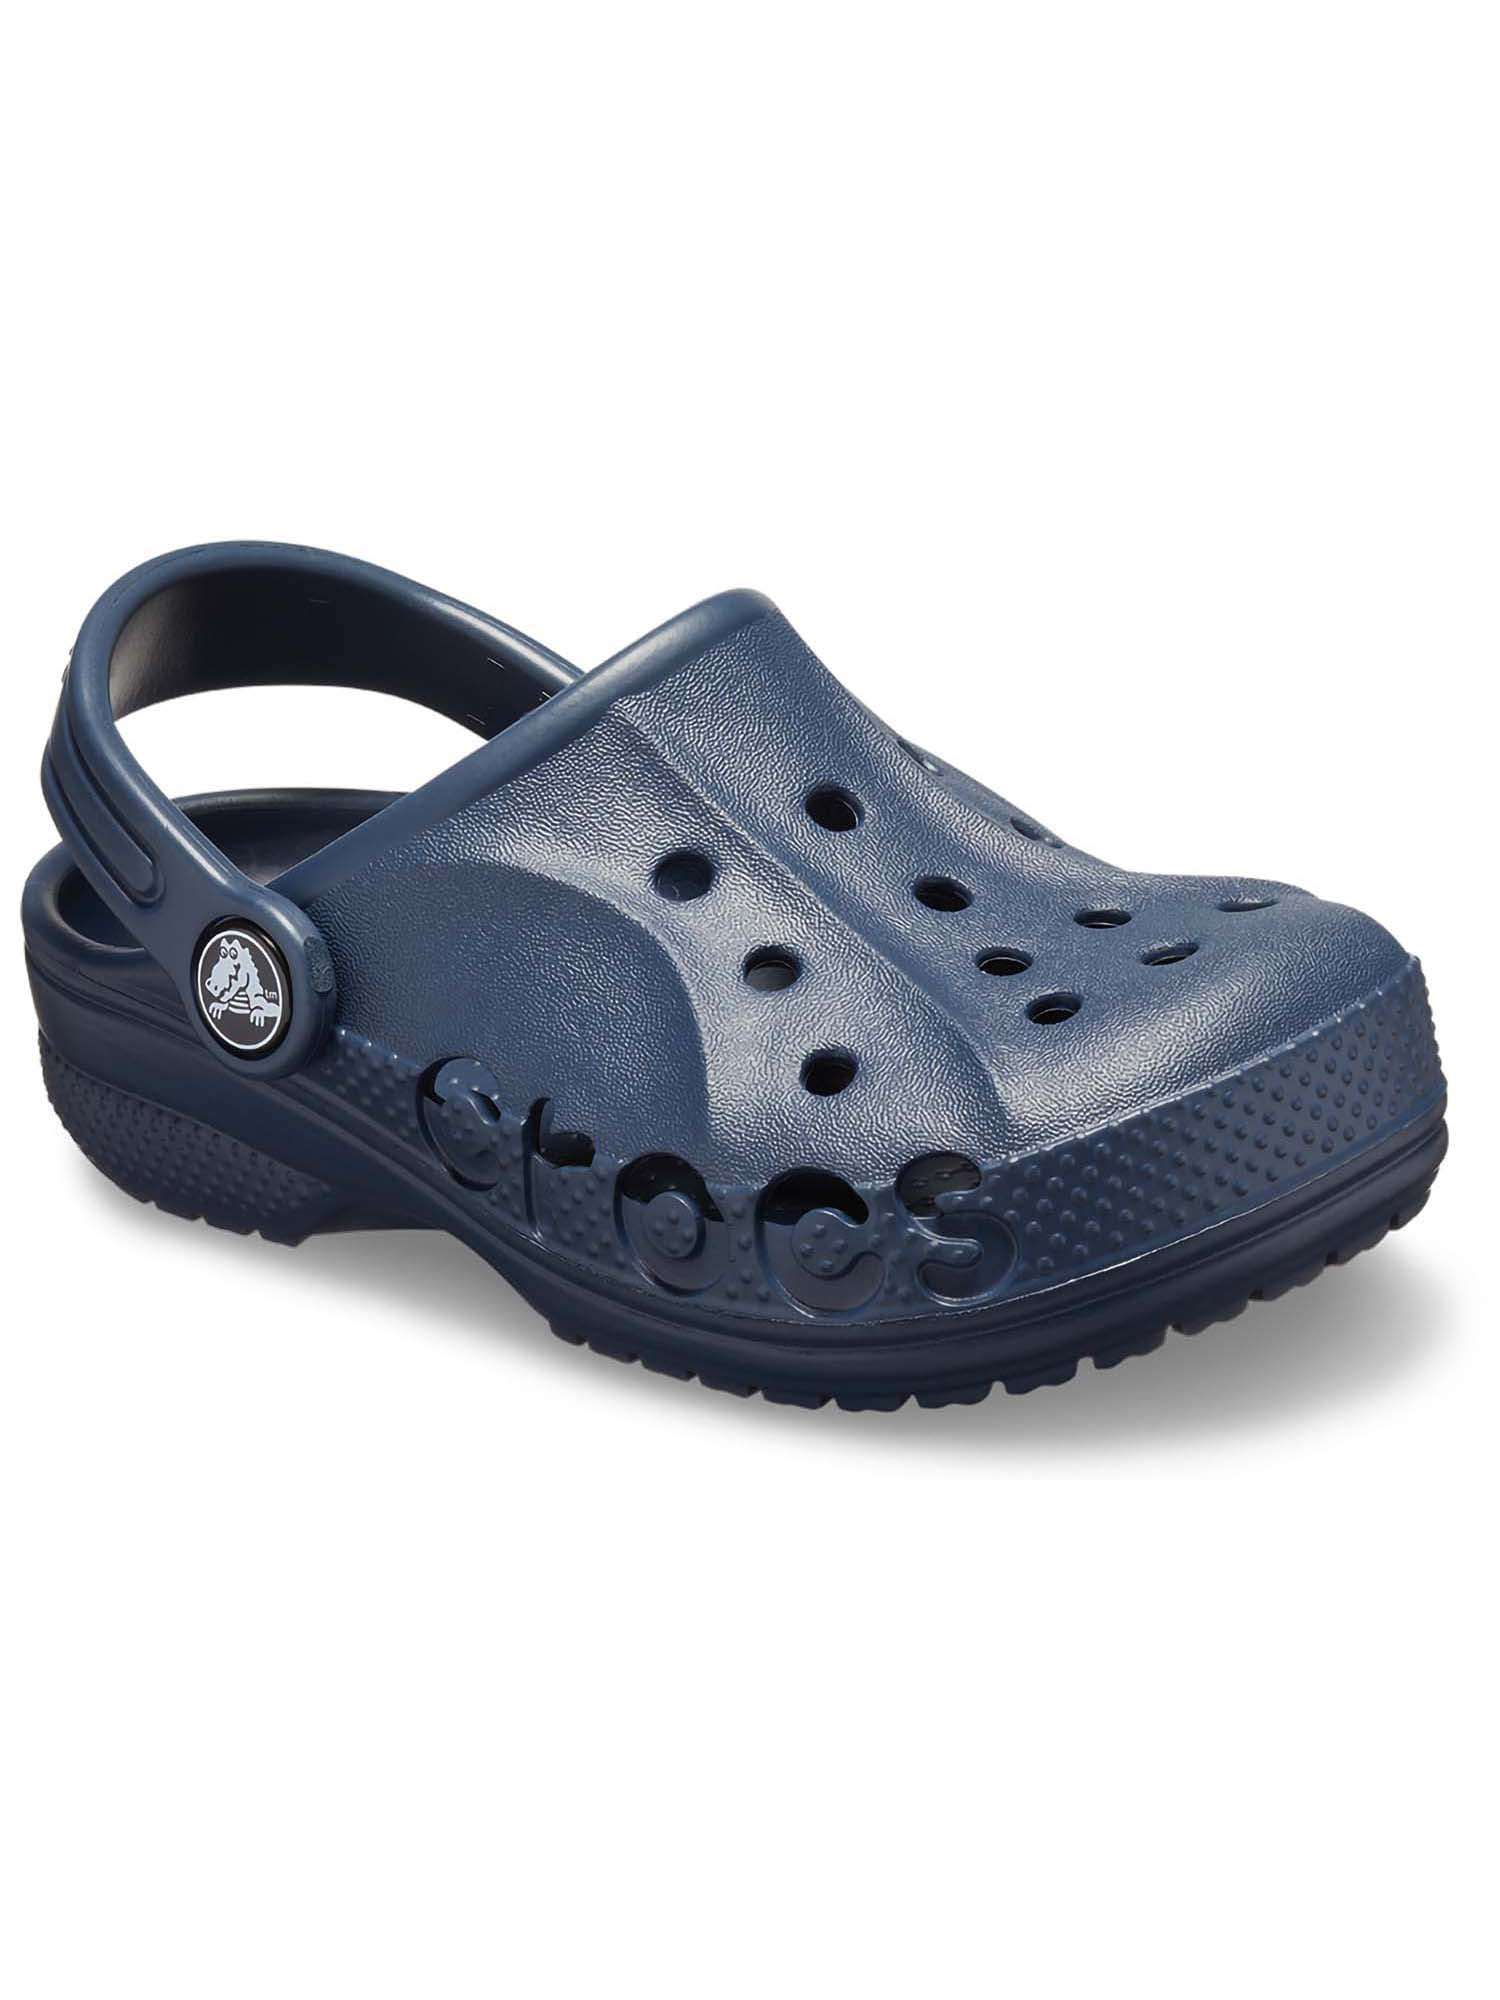 Crocs Toddler & Kids Baya Clog, Sizes 4-3 - Walmart.com